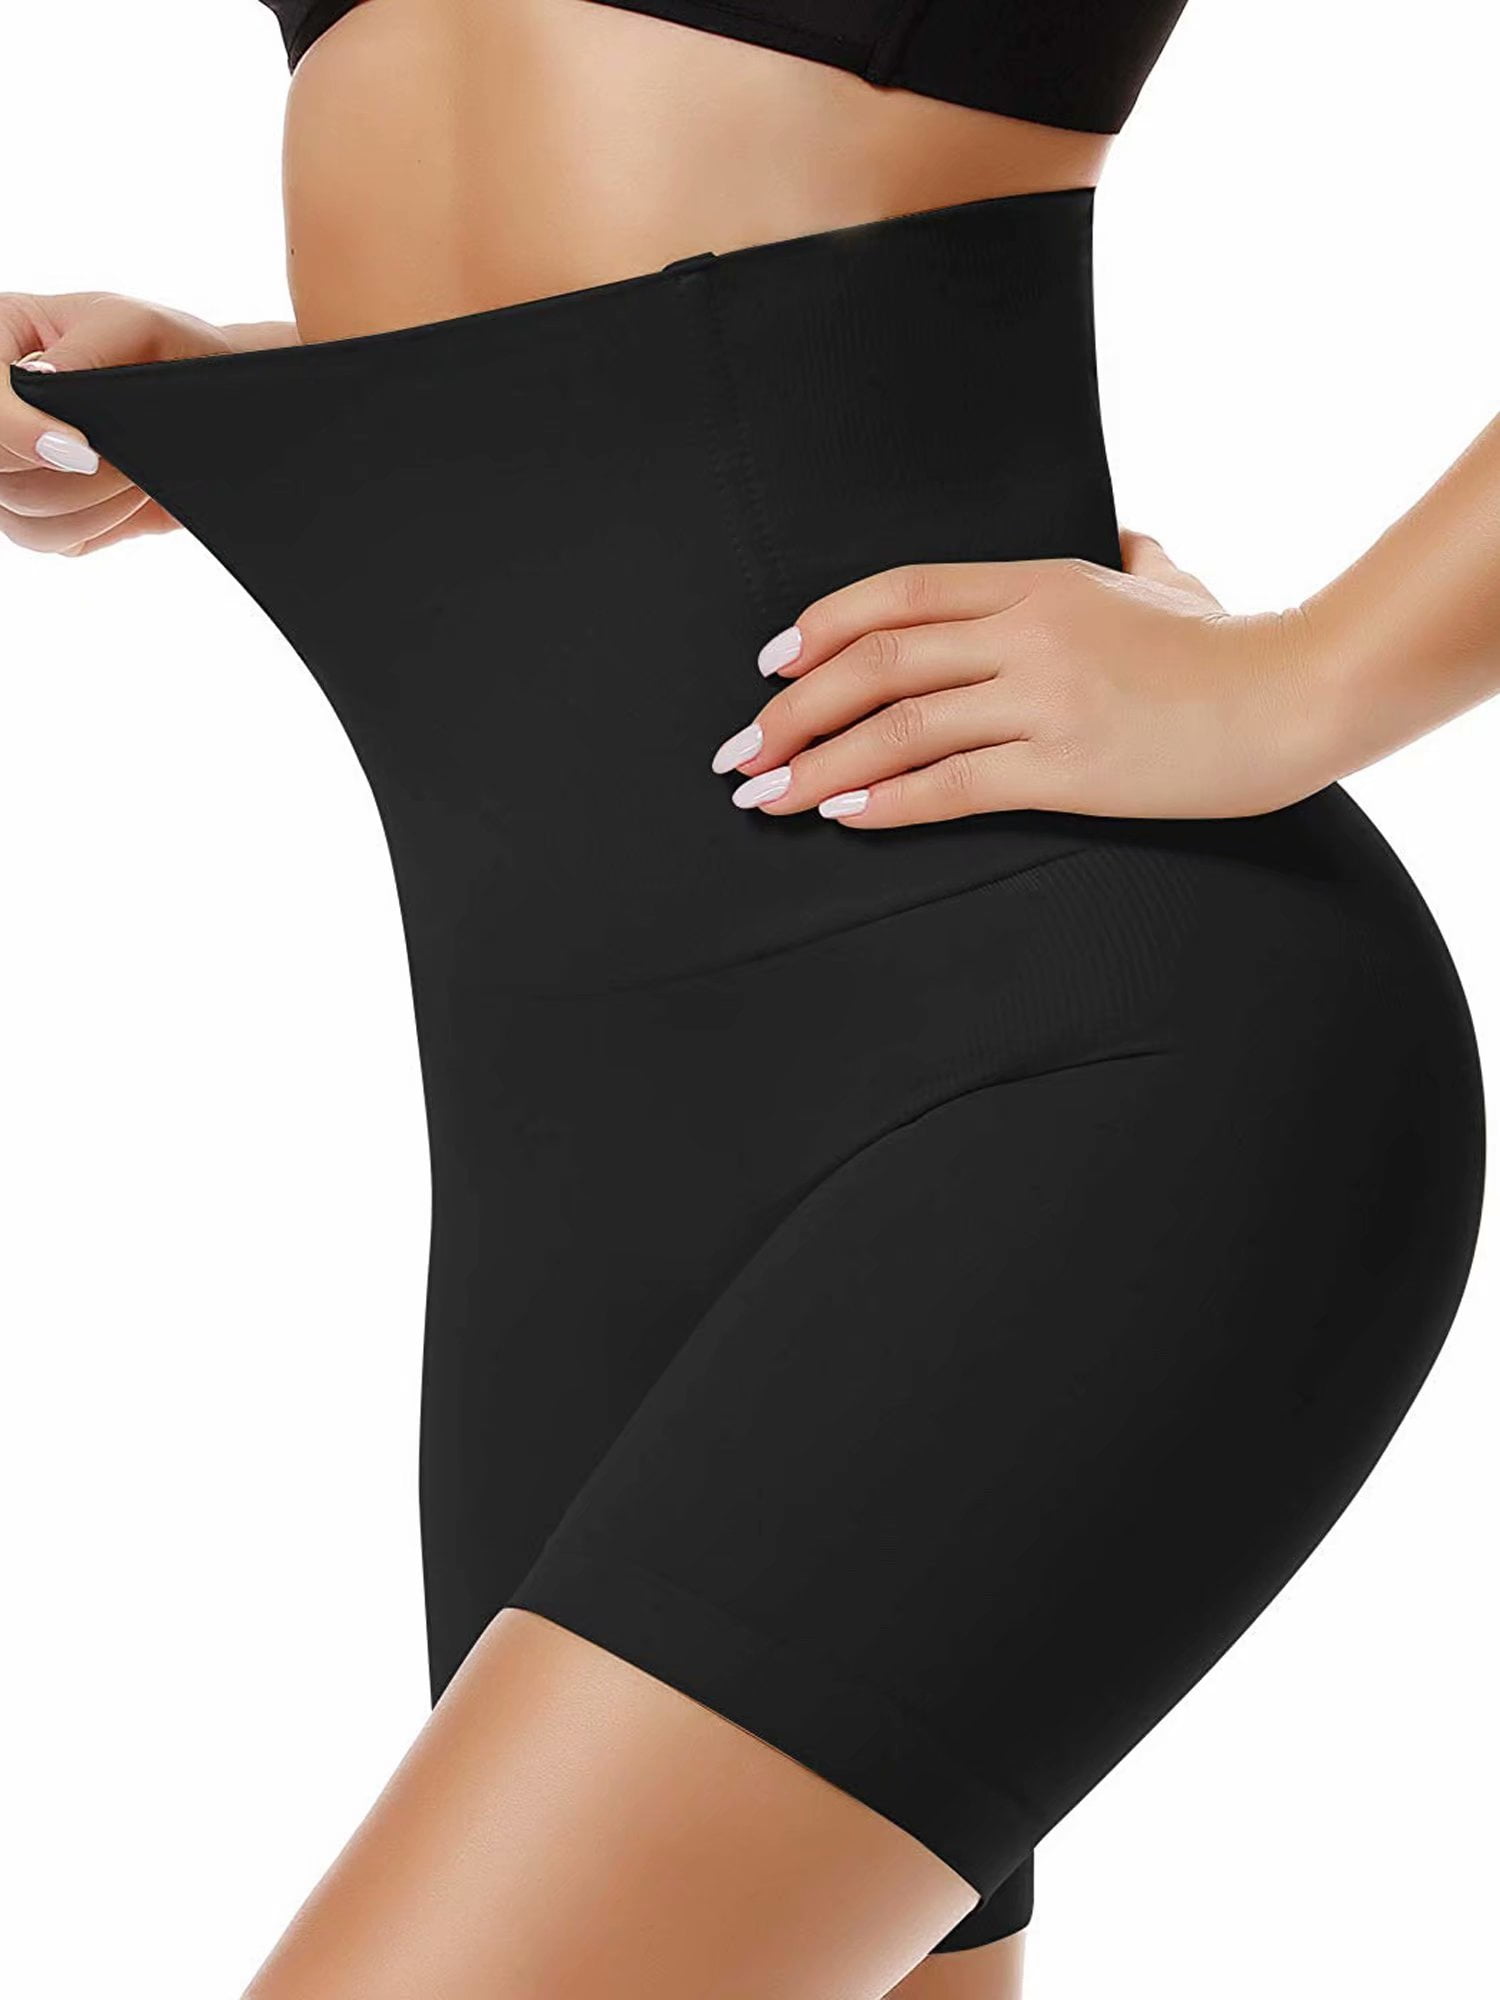 OMG_Shop Women Seamless High Waist Tummy Control Panties Boyshorts Body Shaper Thigh Slimmer Shapewear